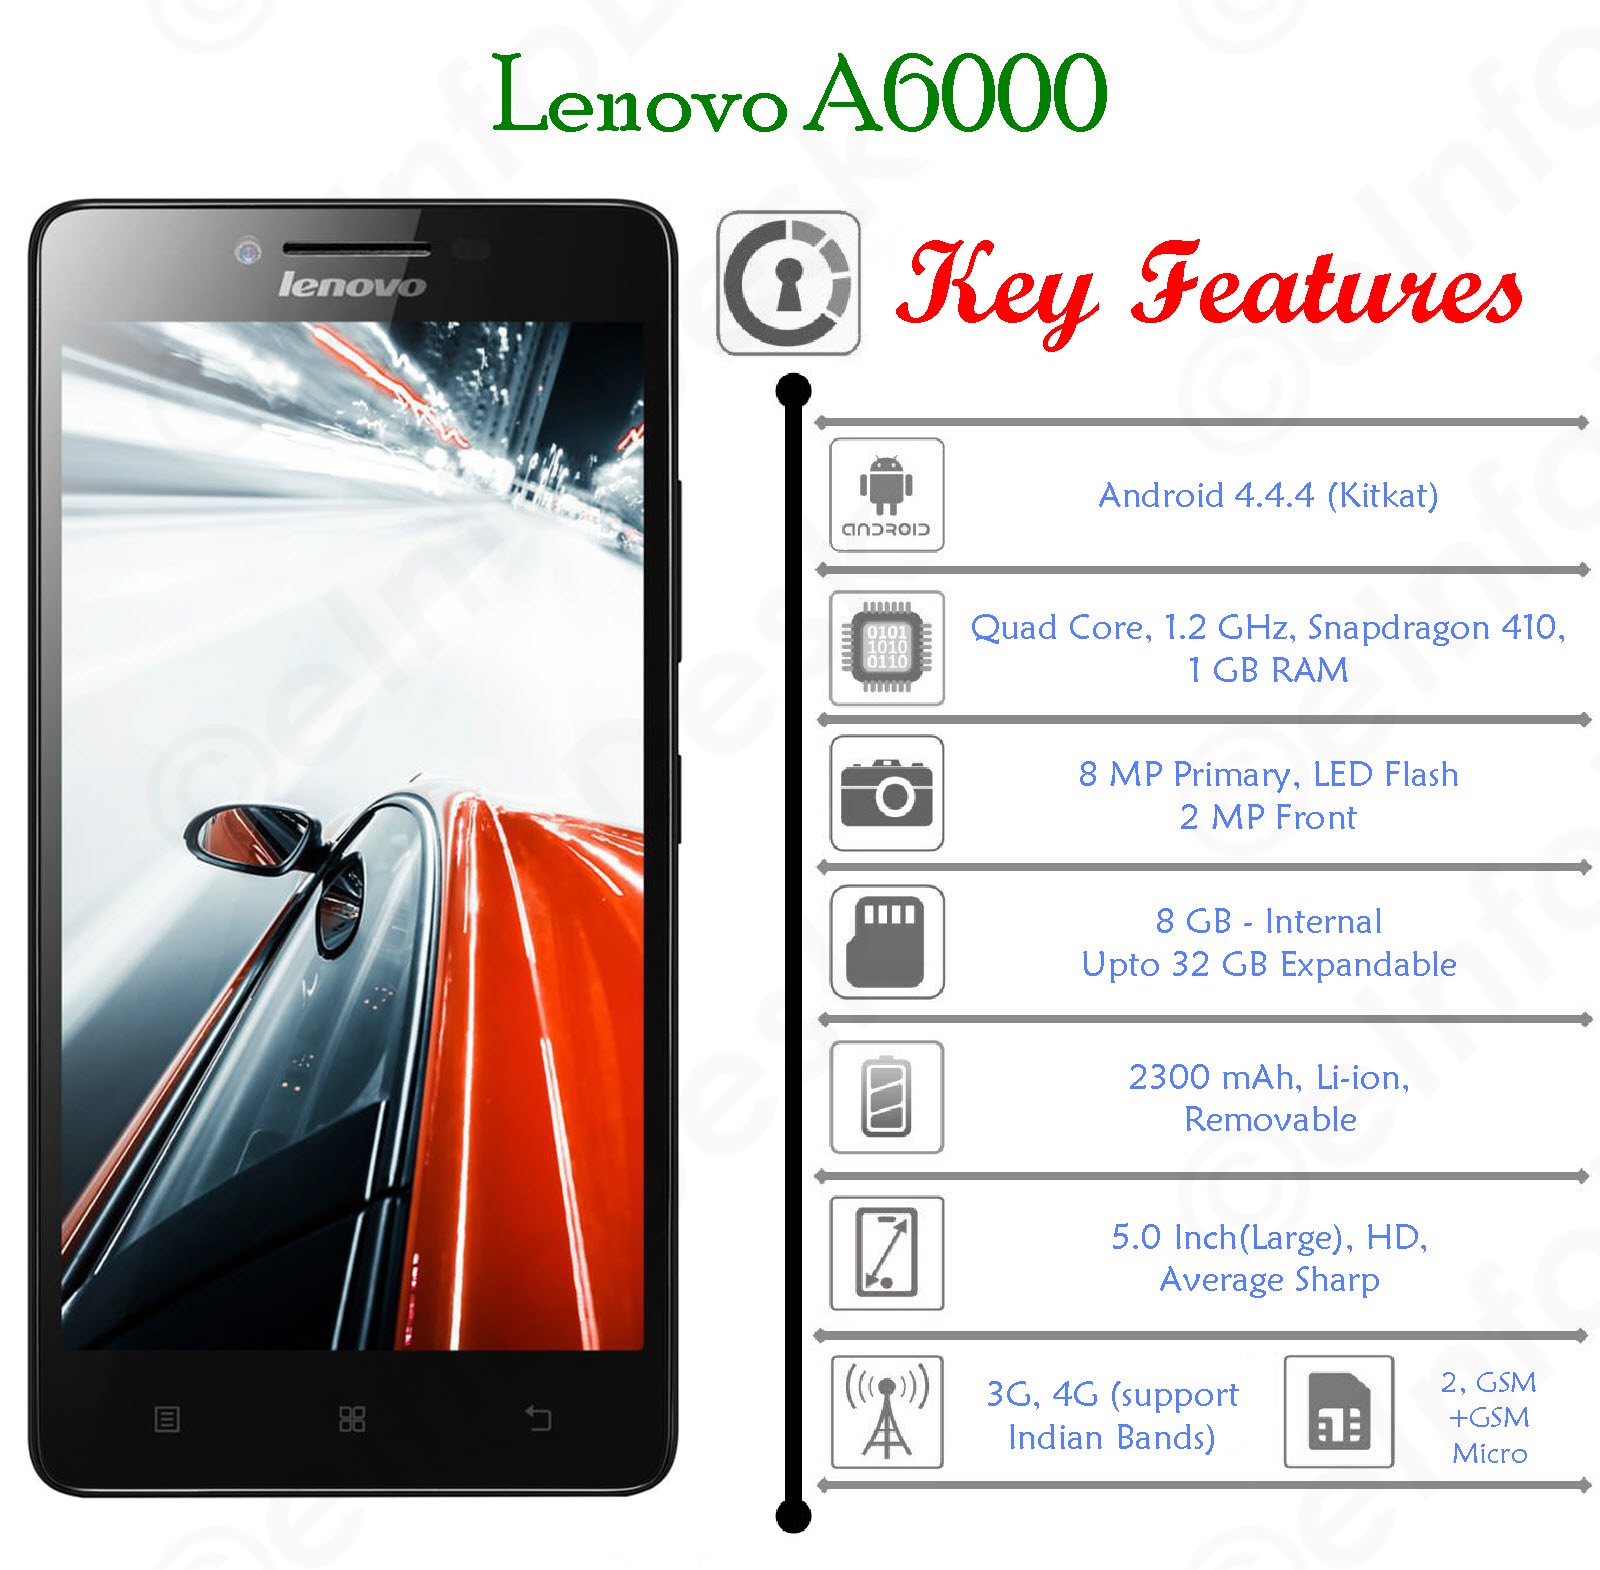 lenovo a6000 key features